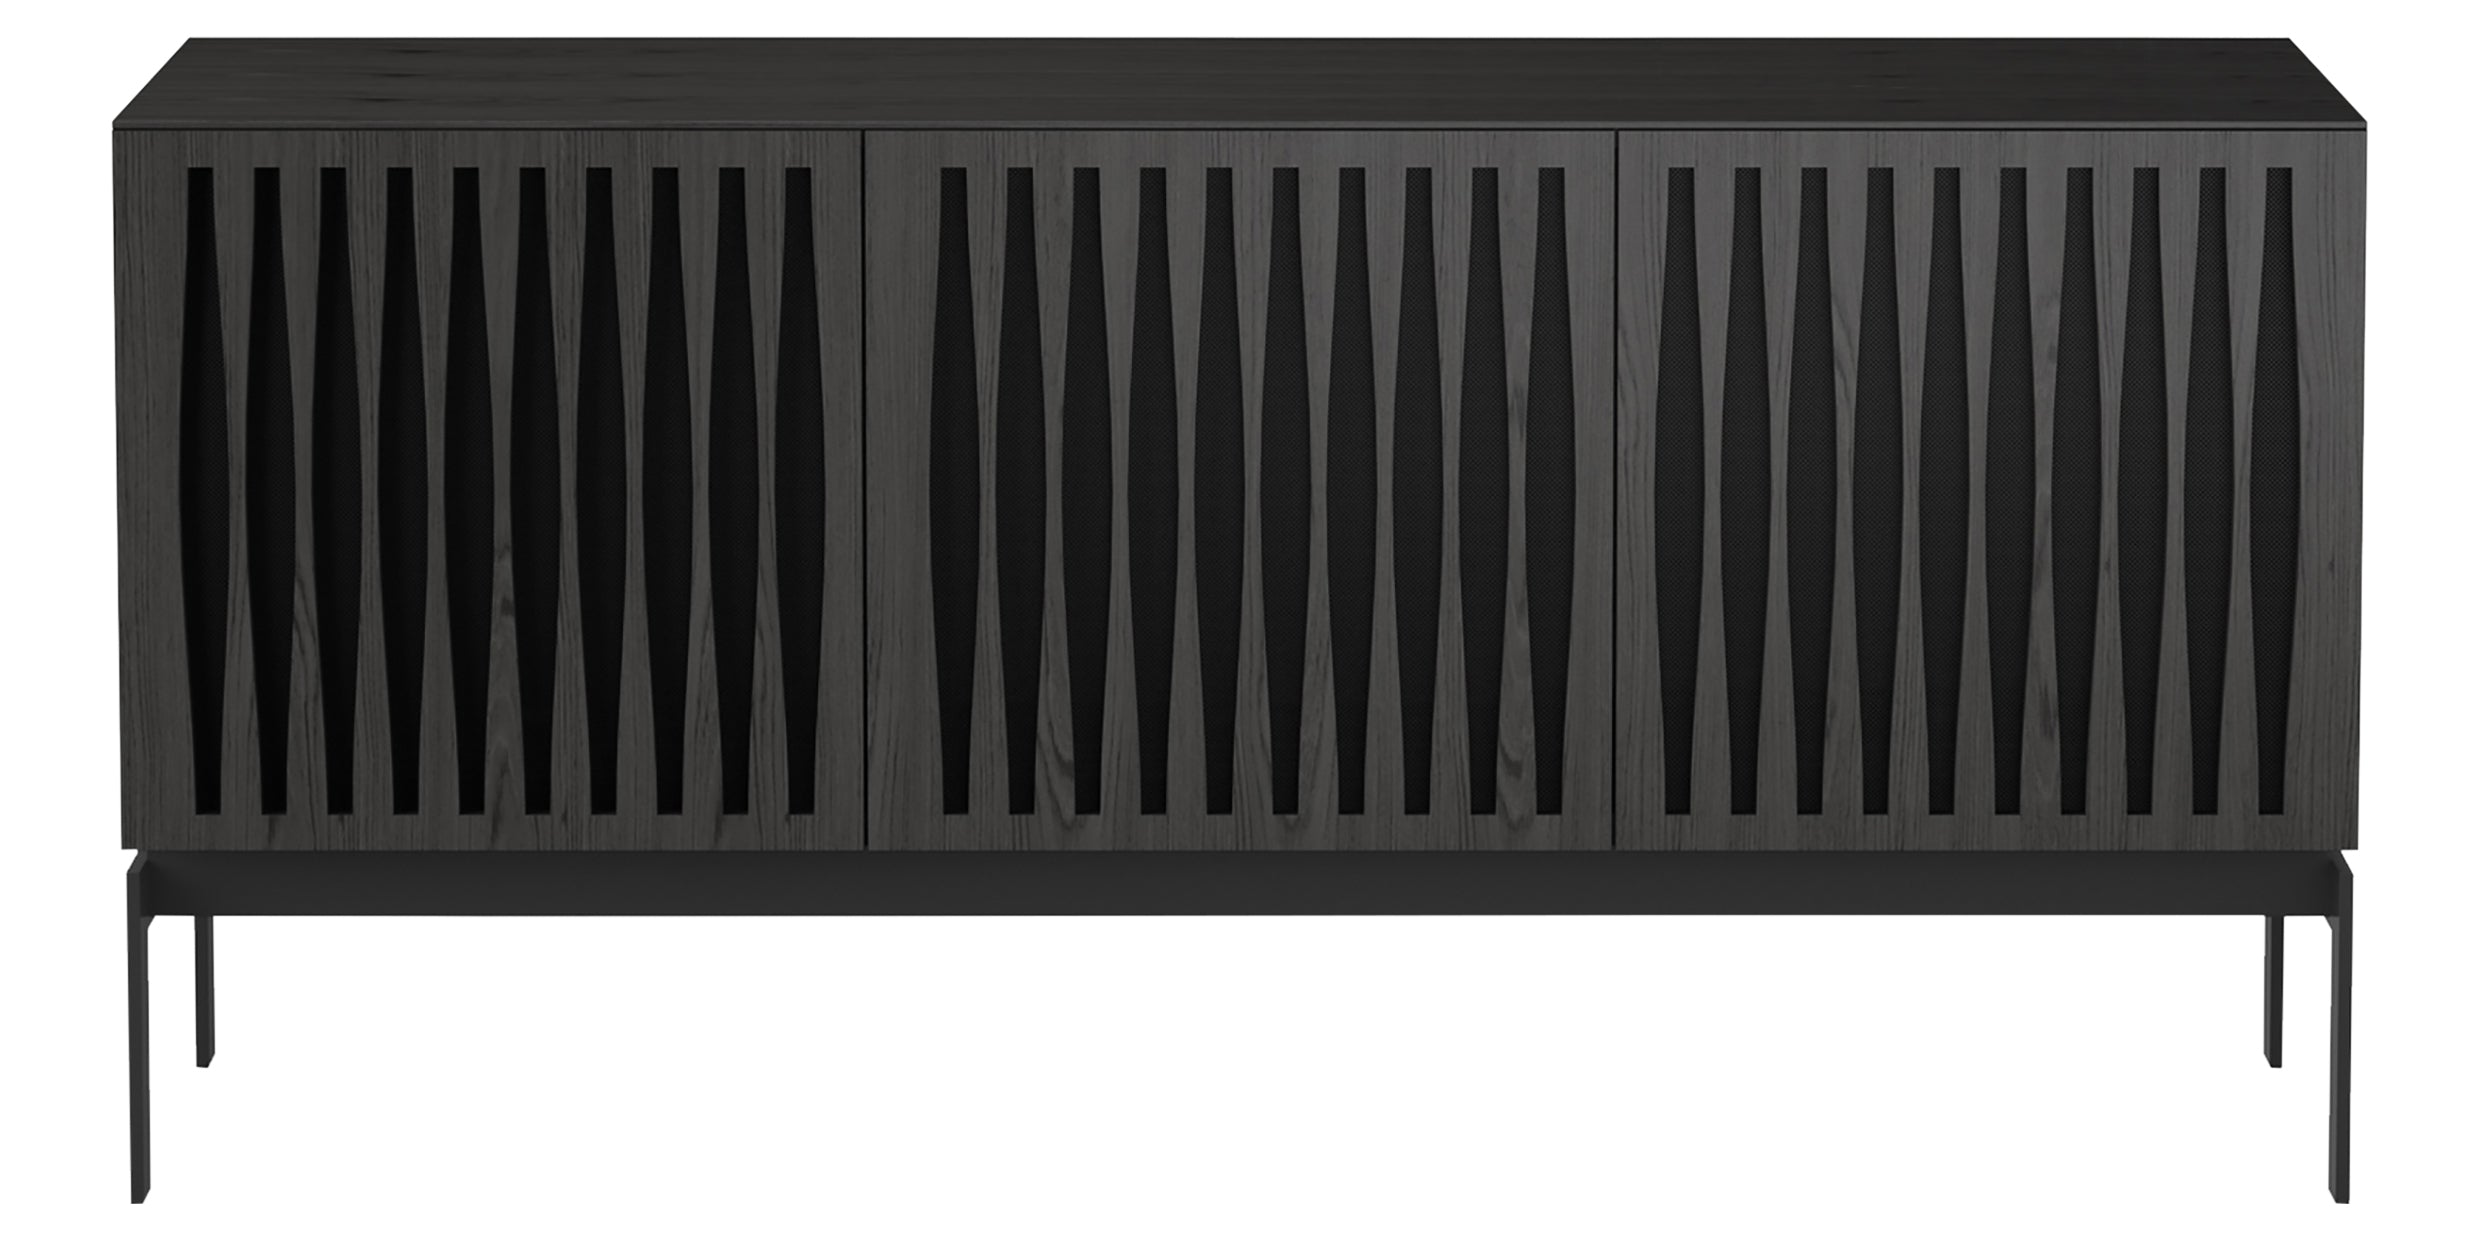 Charcoal Ash Veneer & Black Perforated Steel with Black Steel (Tempo) | BDI Elements 3 Door Storage Cabinet | Valley Ridge Furniture